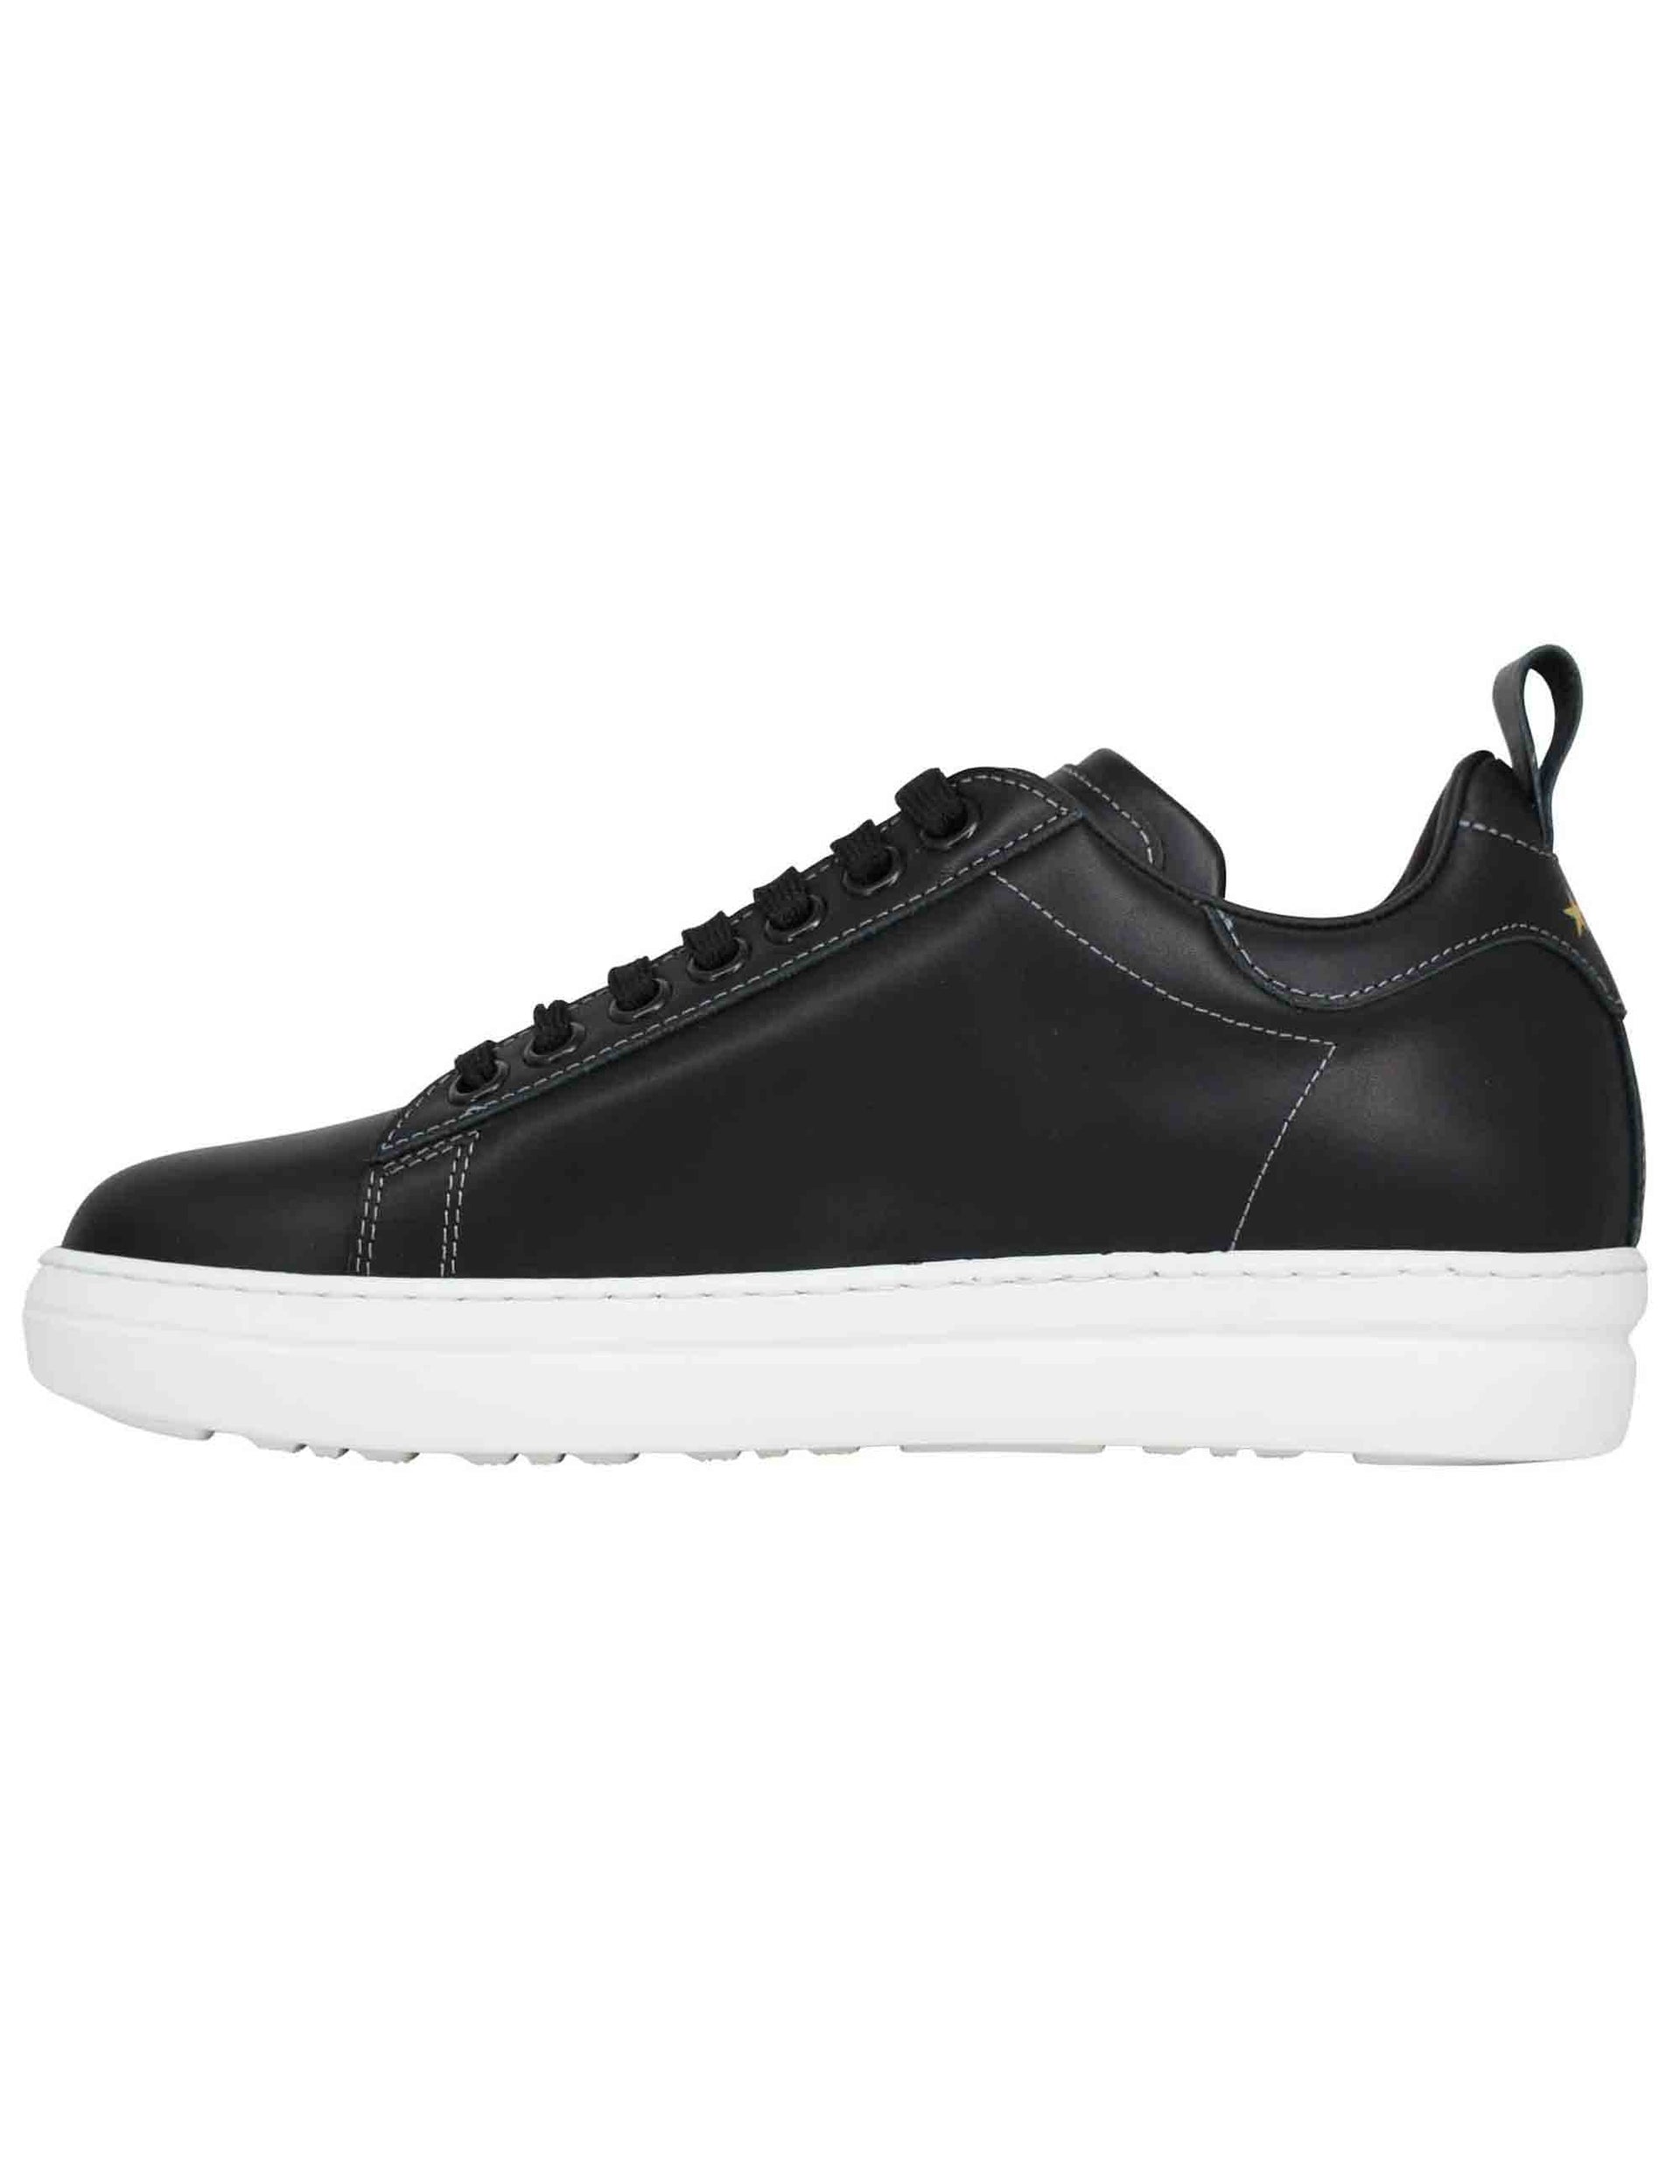 Sneakers uomo Court classic in pelle nera